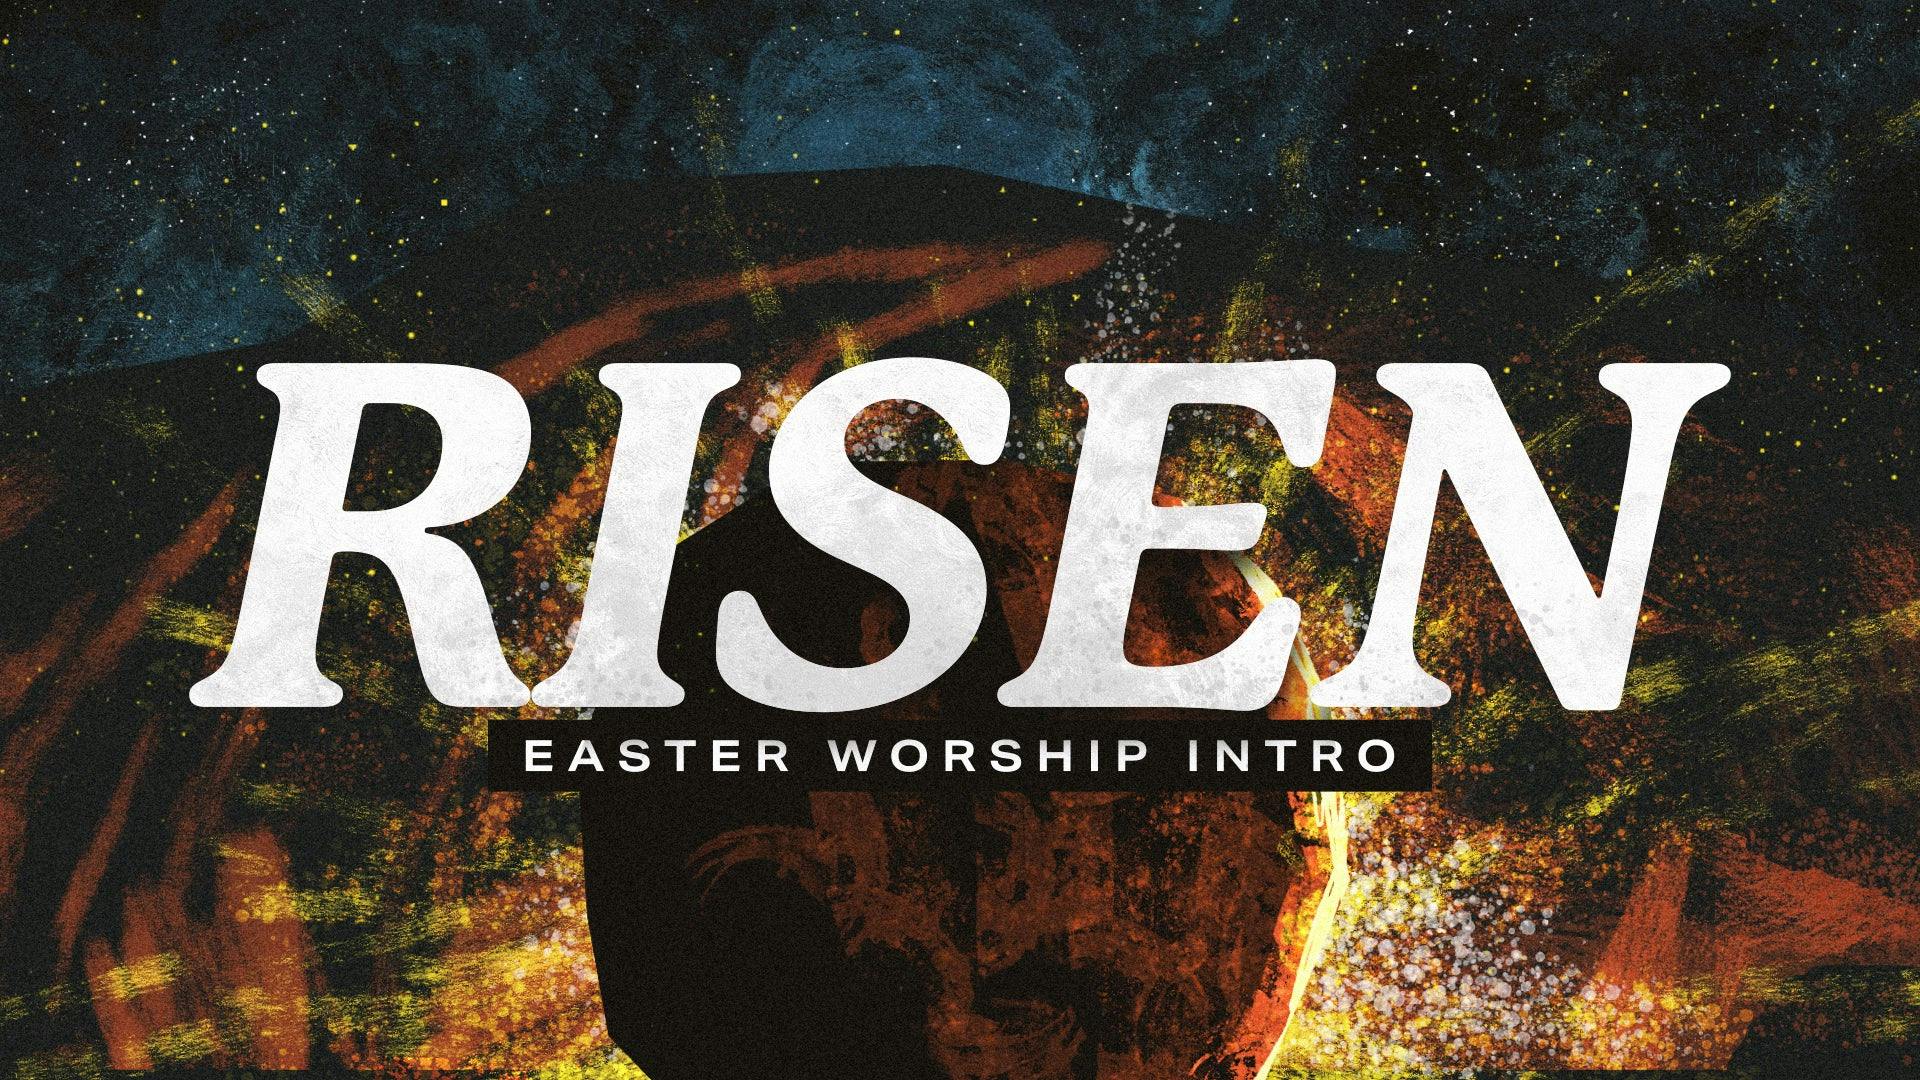 Easter Worship Intro